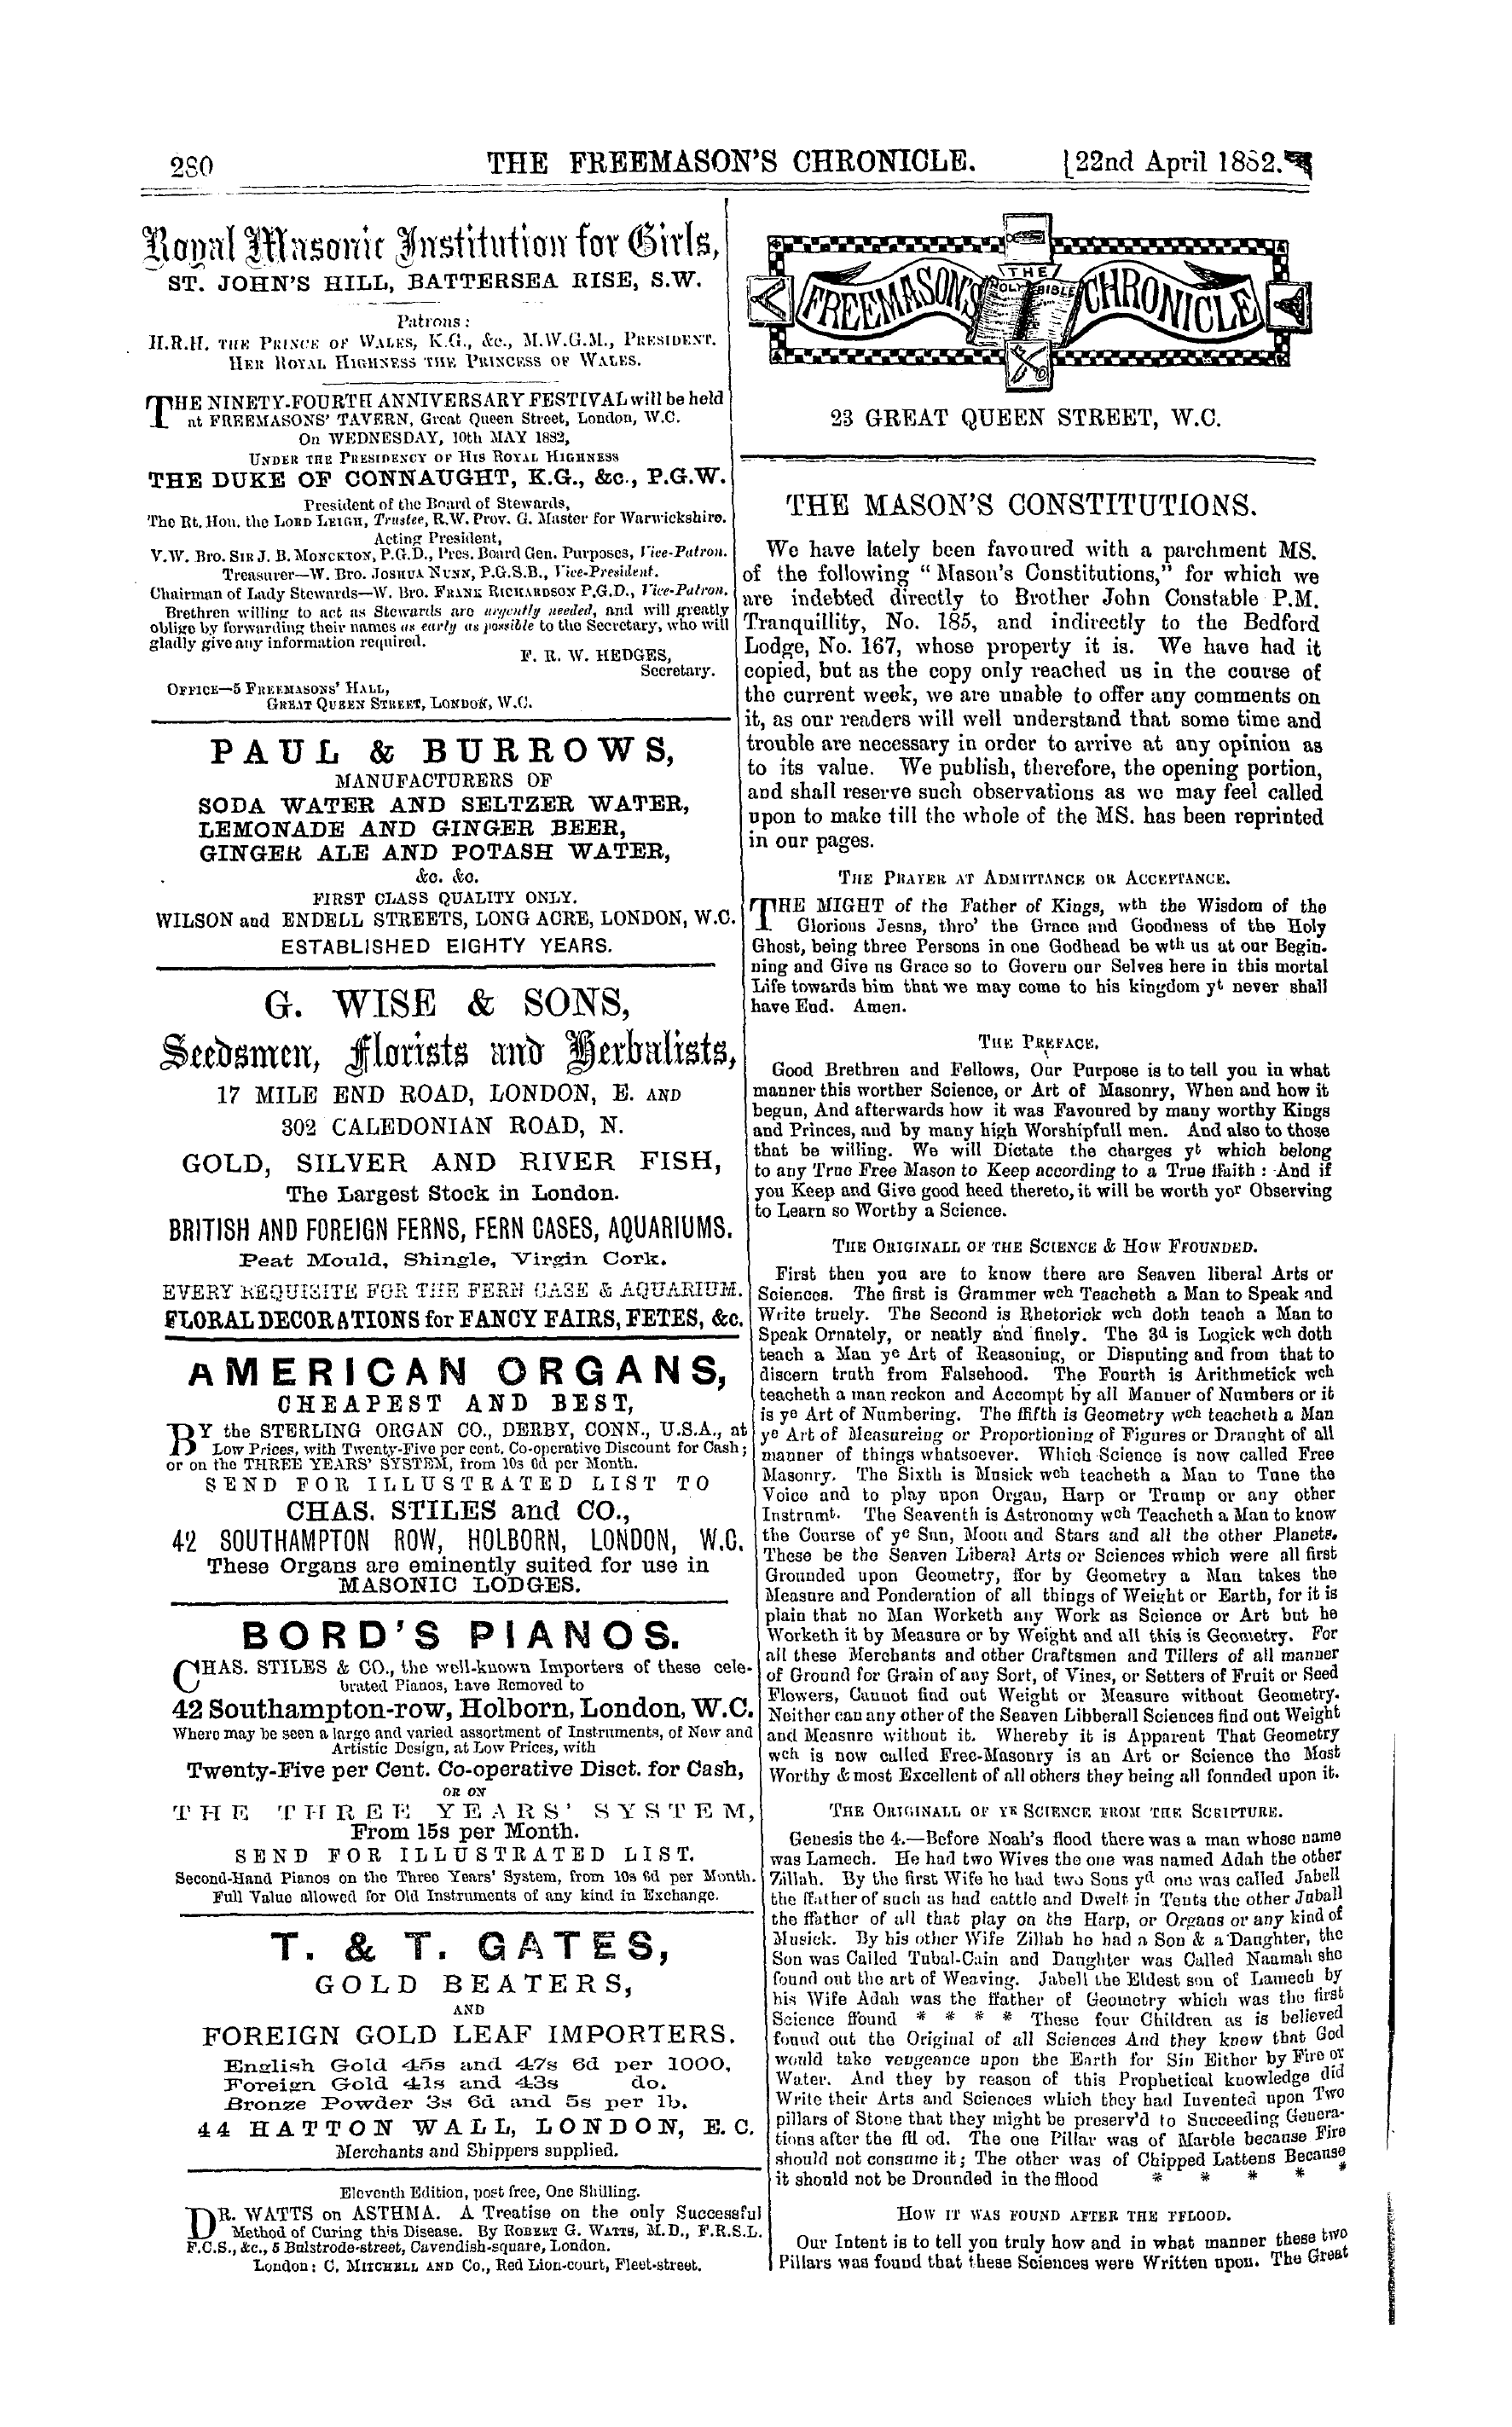 The Freemason's Chronicle: 1882-04-22 - The Mason's Constitutions.